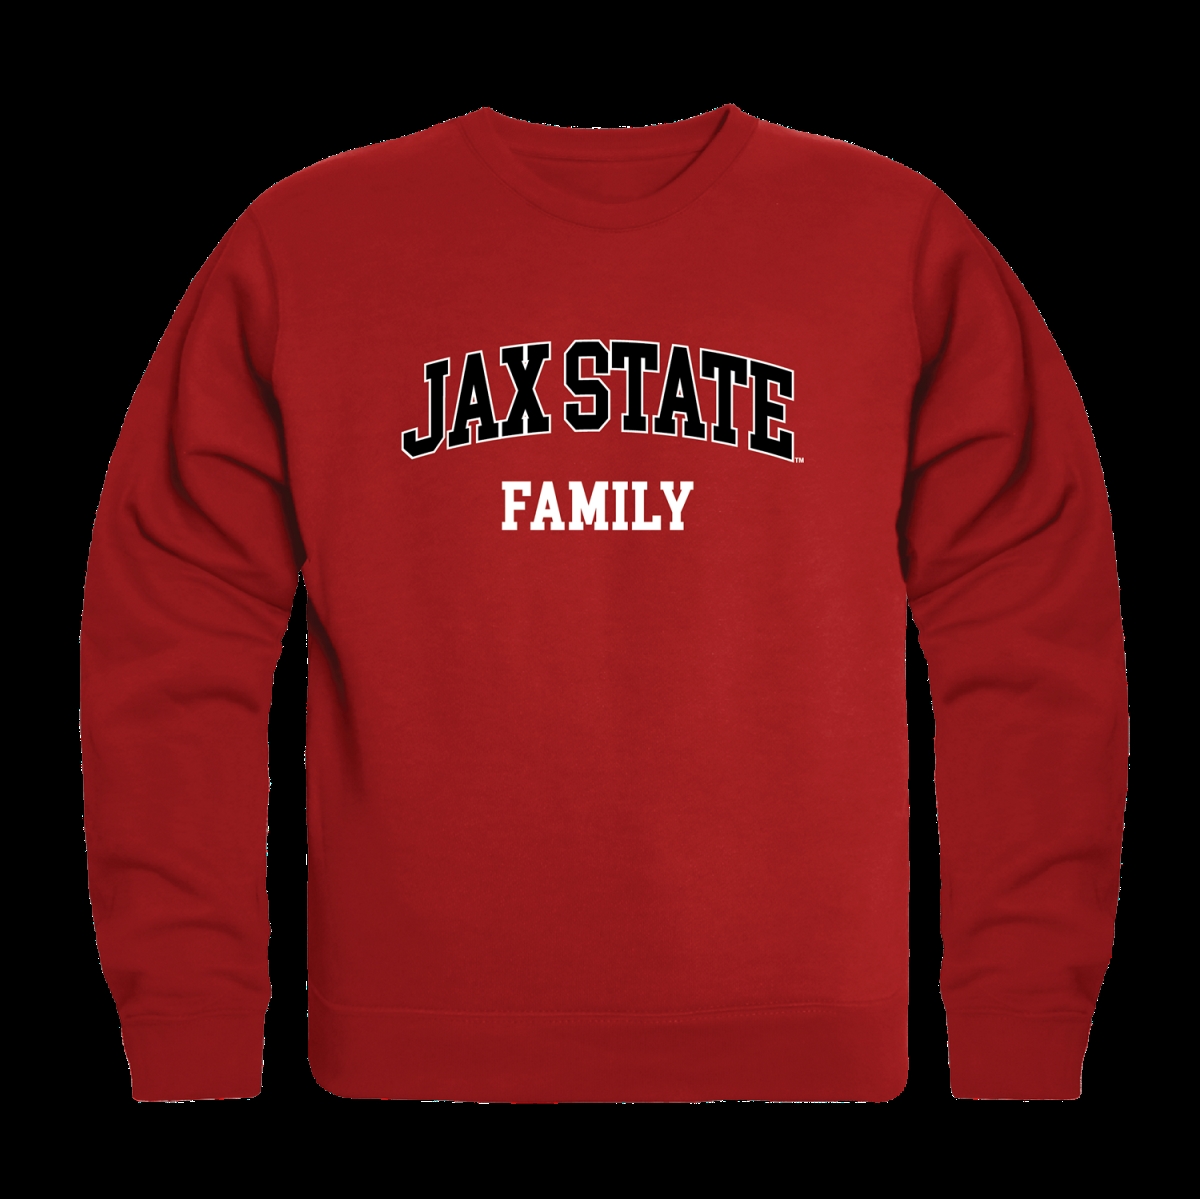 W Republic 572-126-RED-01 Jacksonville State University Gamecocks Family Crewneck Sweatshirt&#44; Red - Small